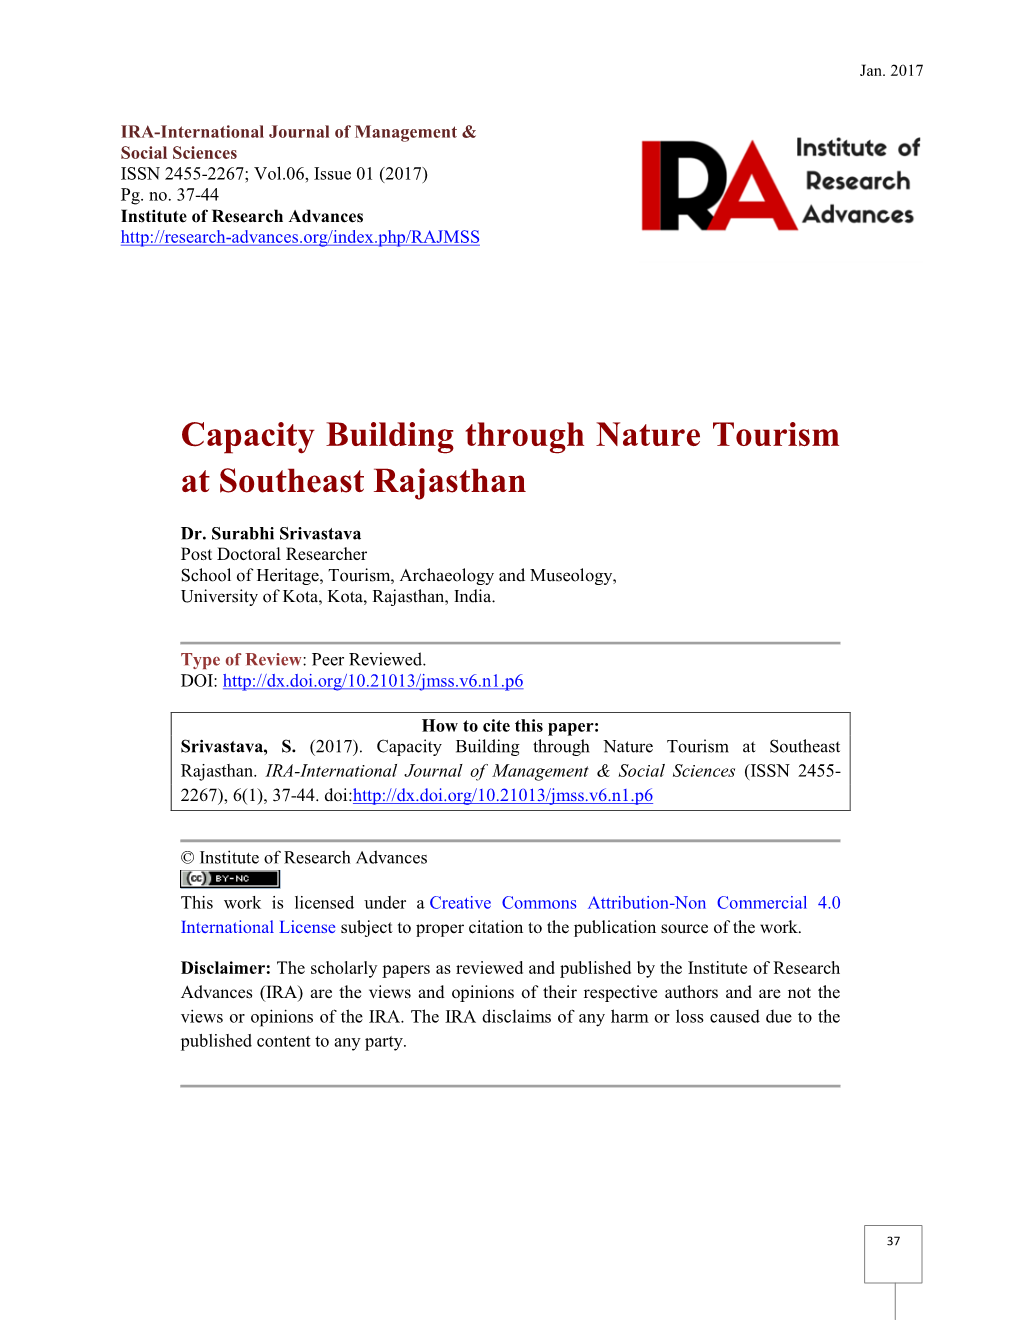 Capacity Building Through Nature Tourism at Southeast Rajasthan